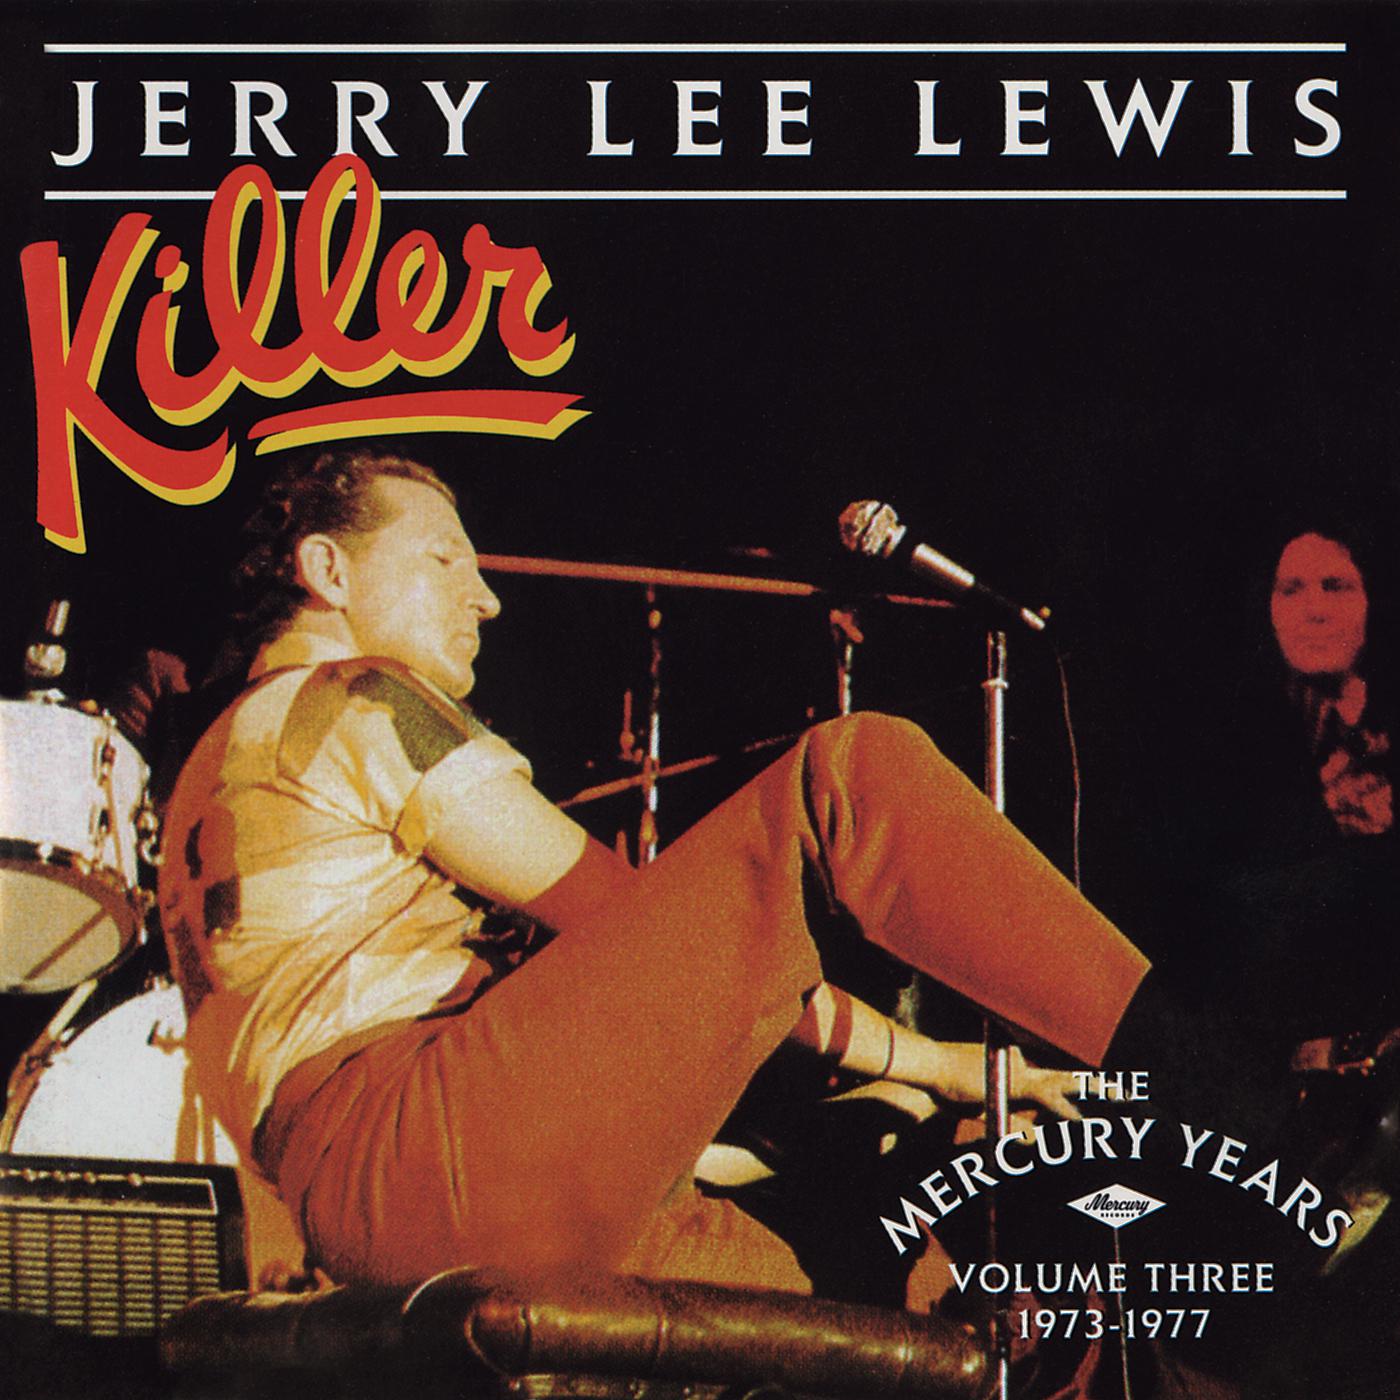 Джерри бит. Jerry Lee Lewis collection. Джерри ли Льюис обложки альбомов. Great balls of Fire Джерри ли Льюис. Jerry Lee Lewis III.